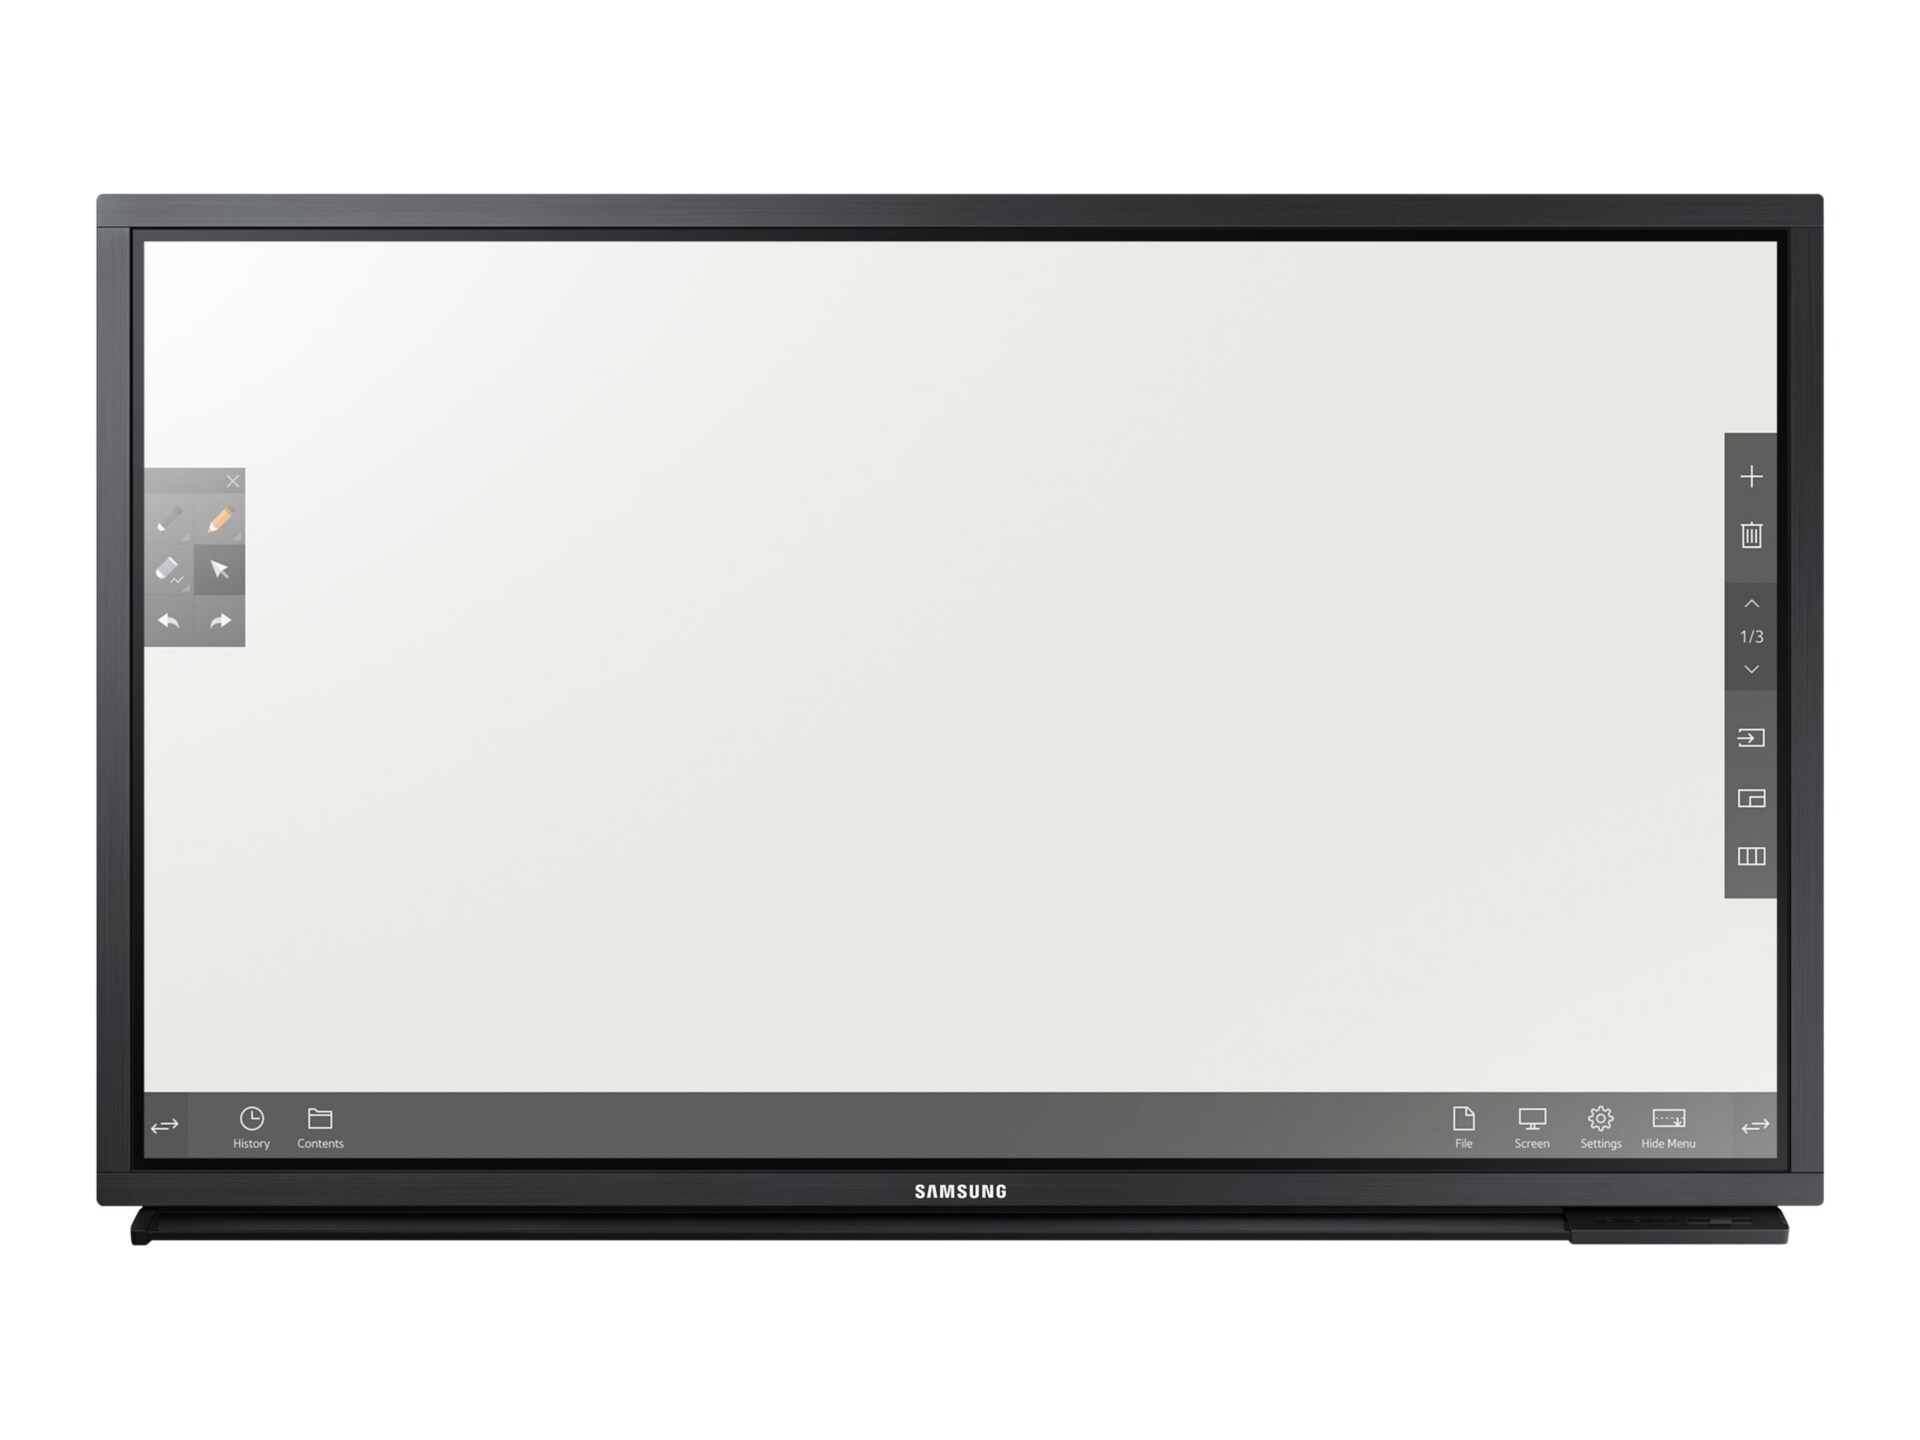 Samsung DM75E-BR DME-BR Series - 75" Class ( 74.5" viewable ) LED display